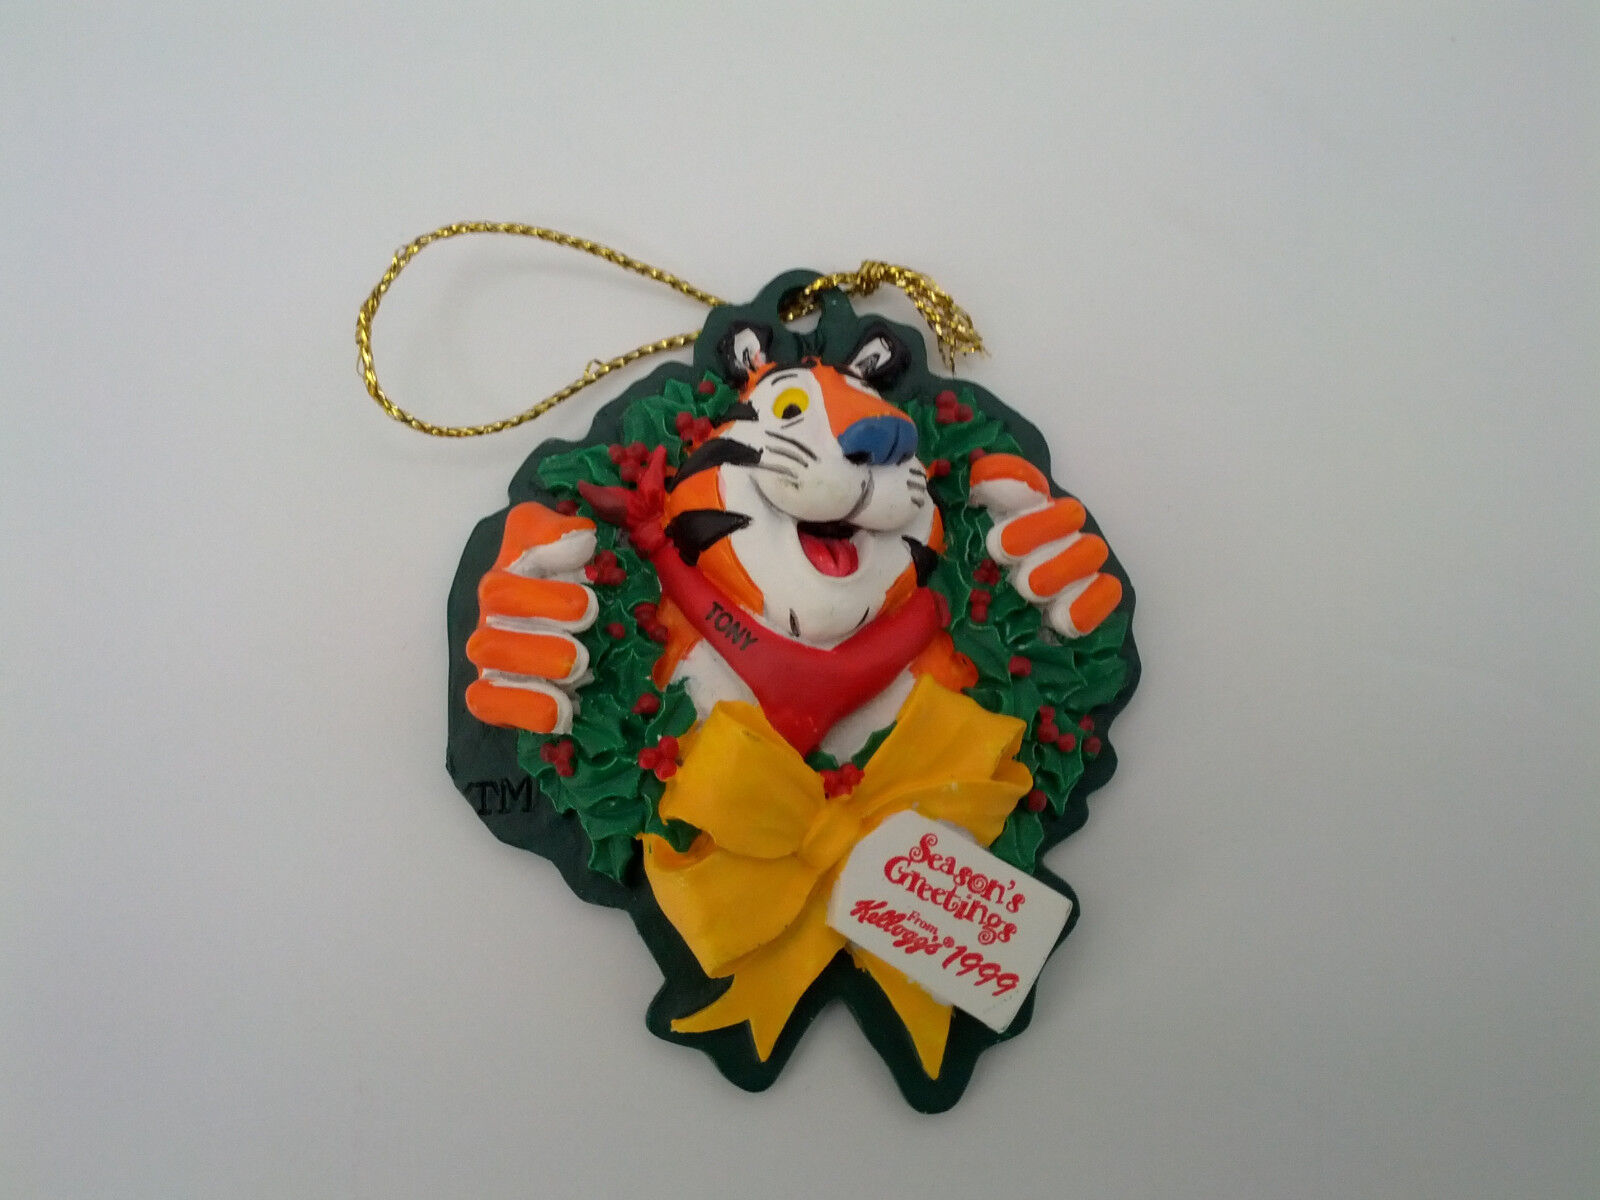 Kellogg cereal 1999 Tony the tiger season' greetings Christmas tree ornament - $19.75